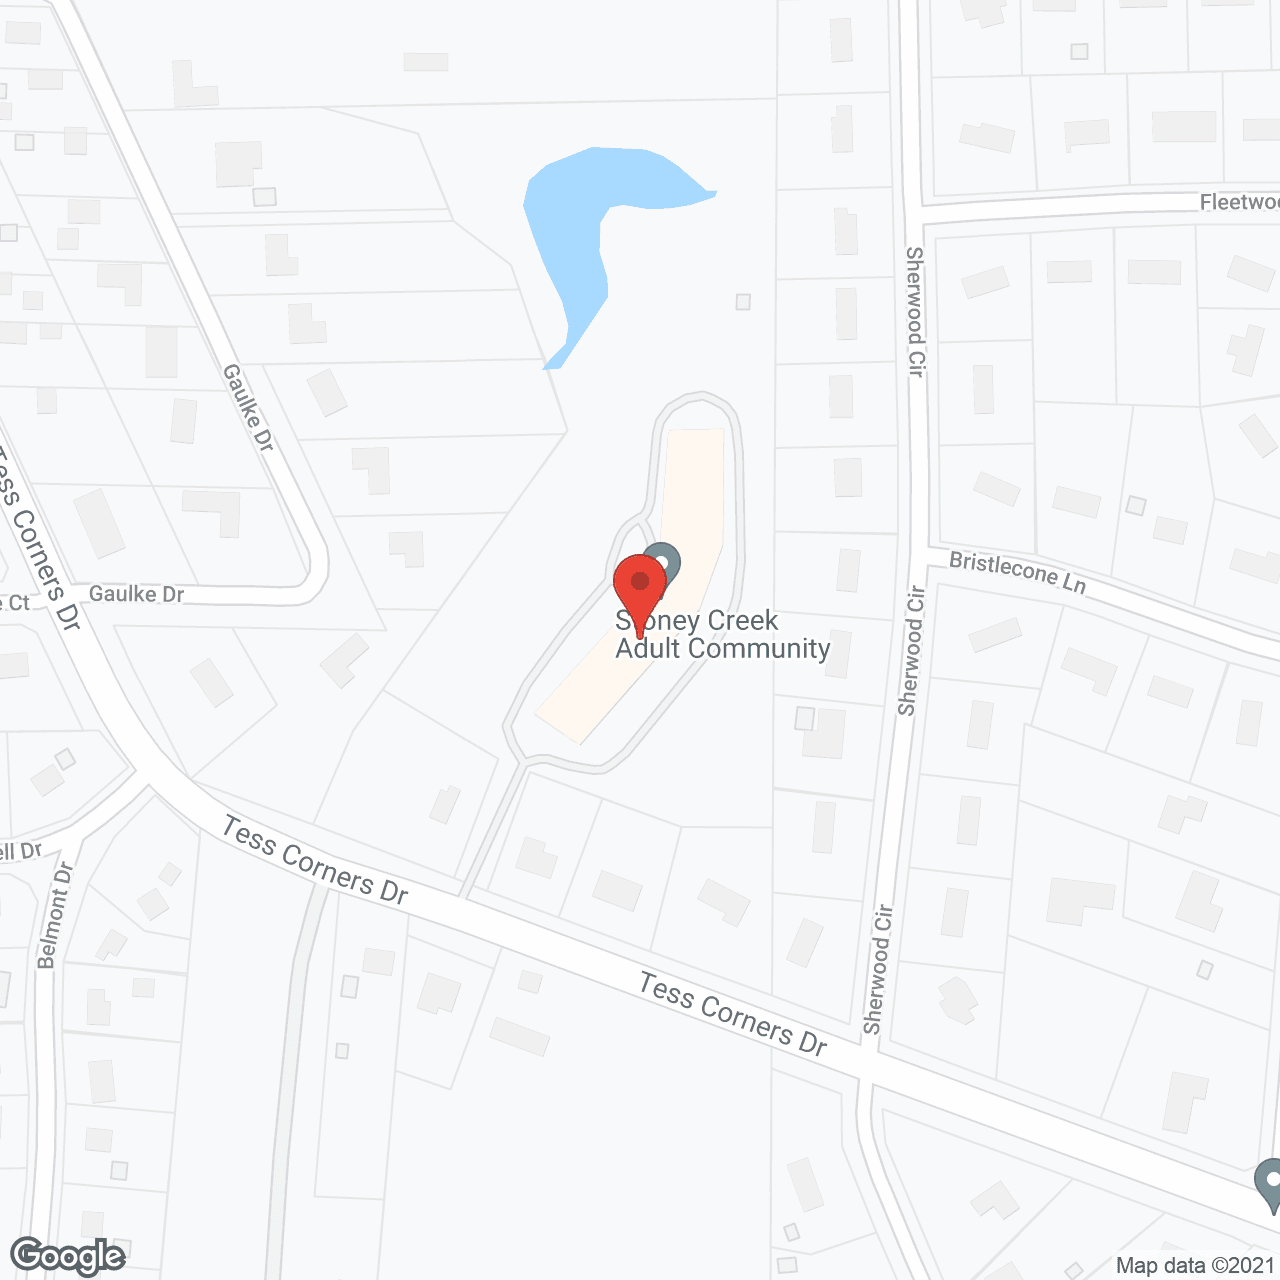 Stony Creek Adult Community in google map